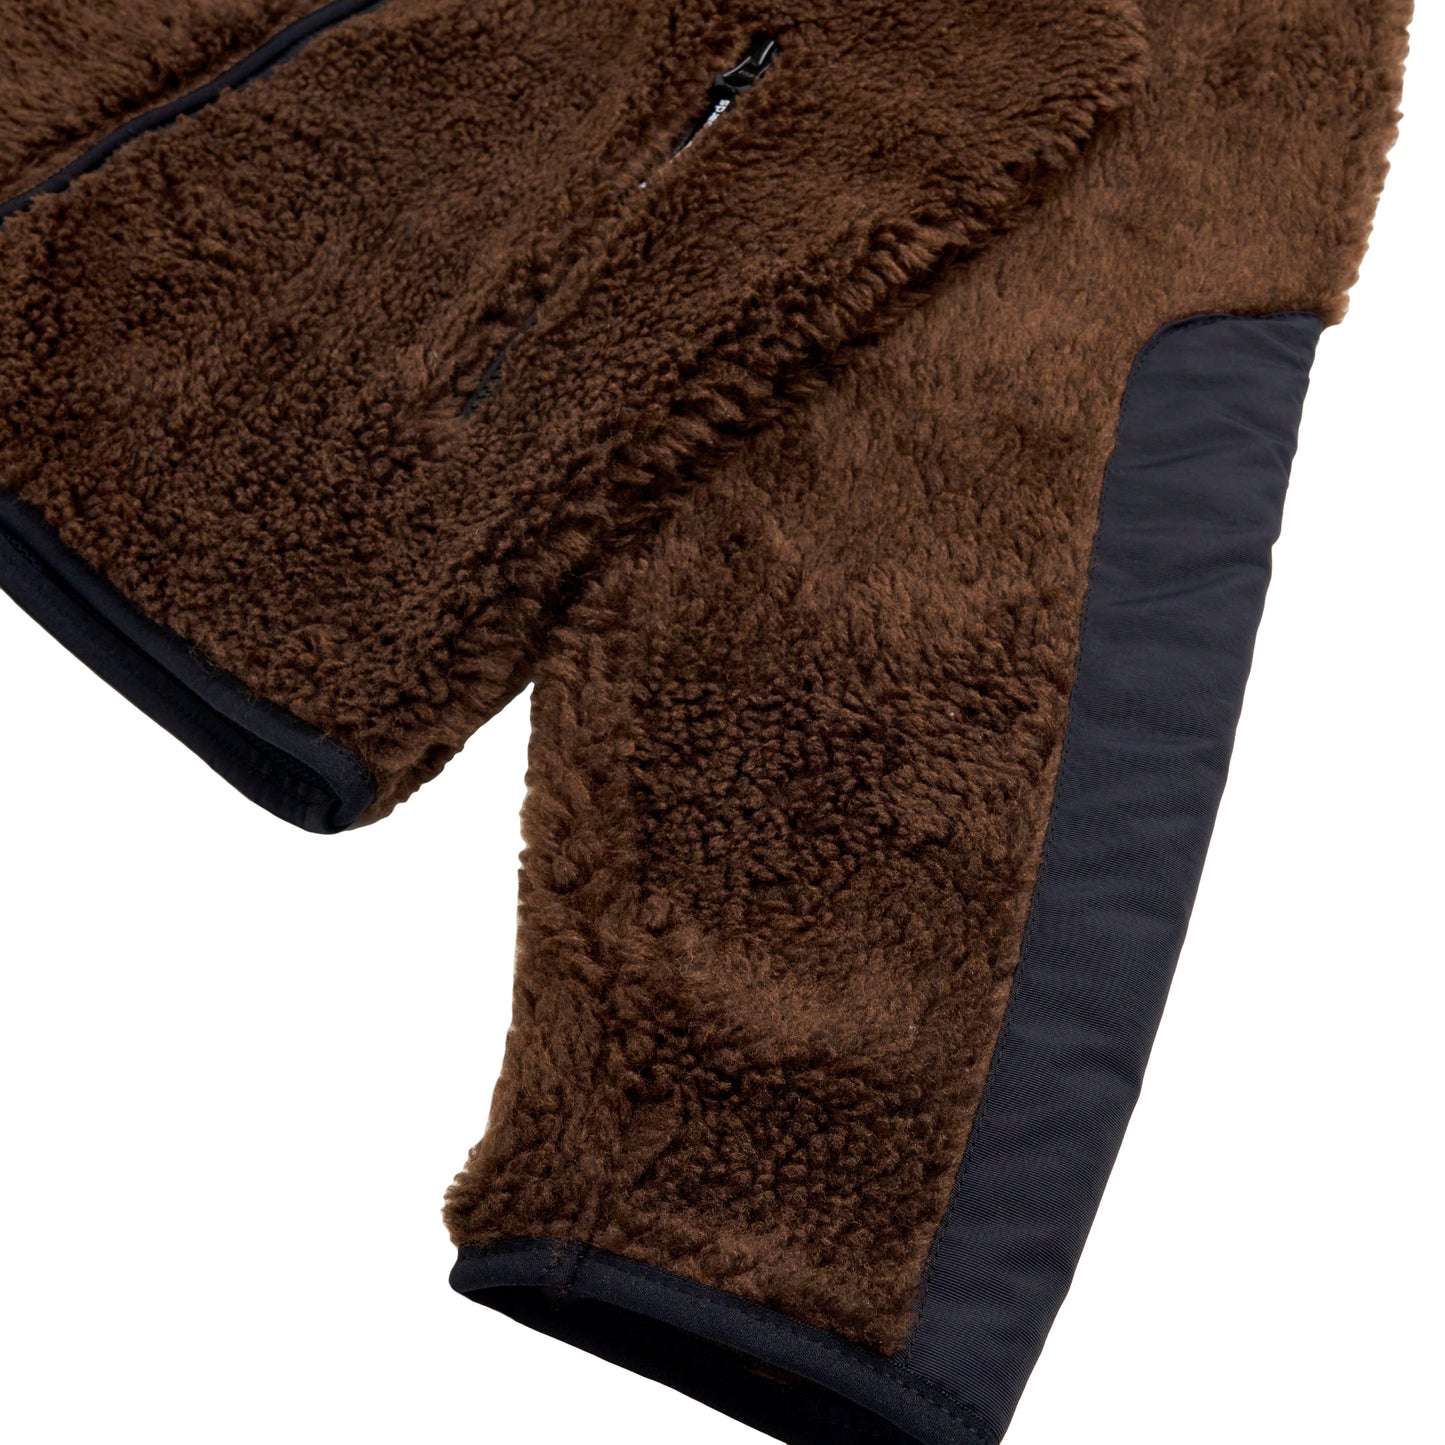 F&B sherpa fleece jacket dark brown